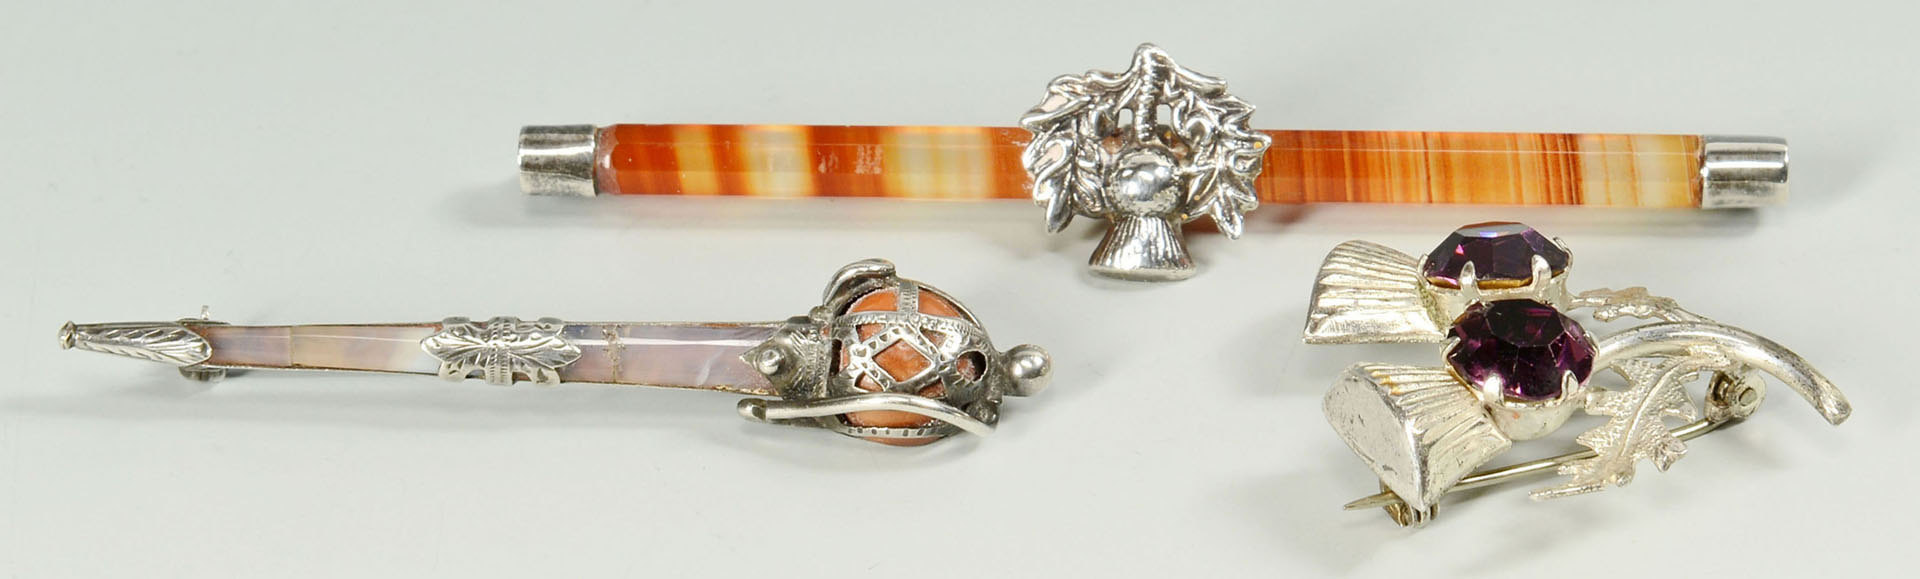 Lot 503: Scottish style Jewelry and Silverware